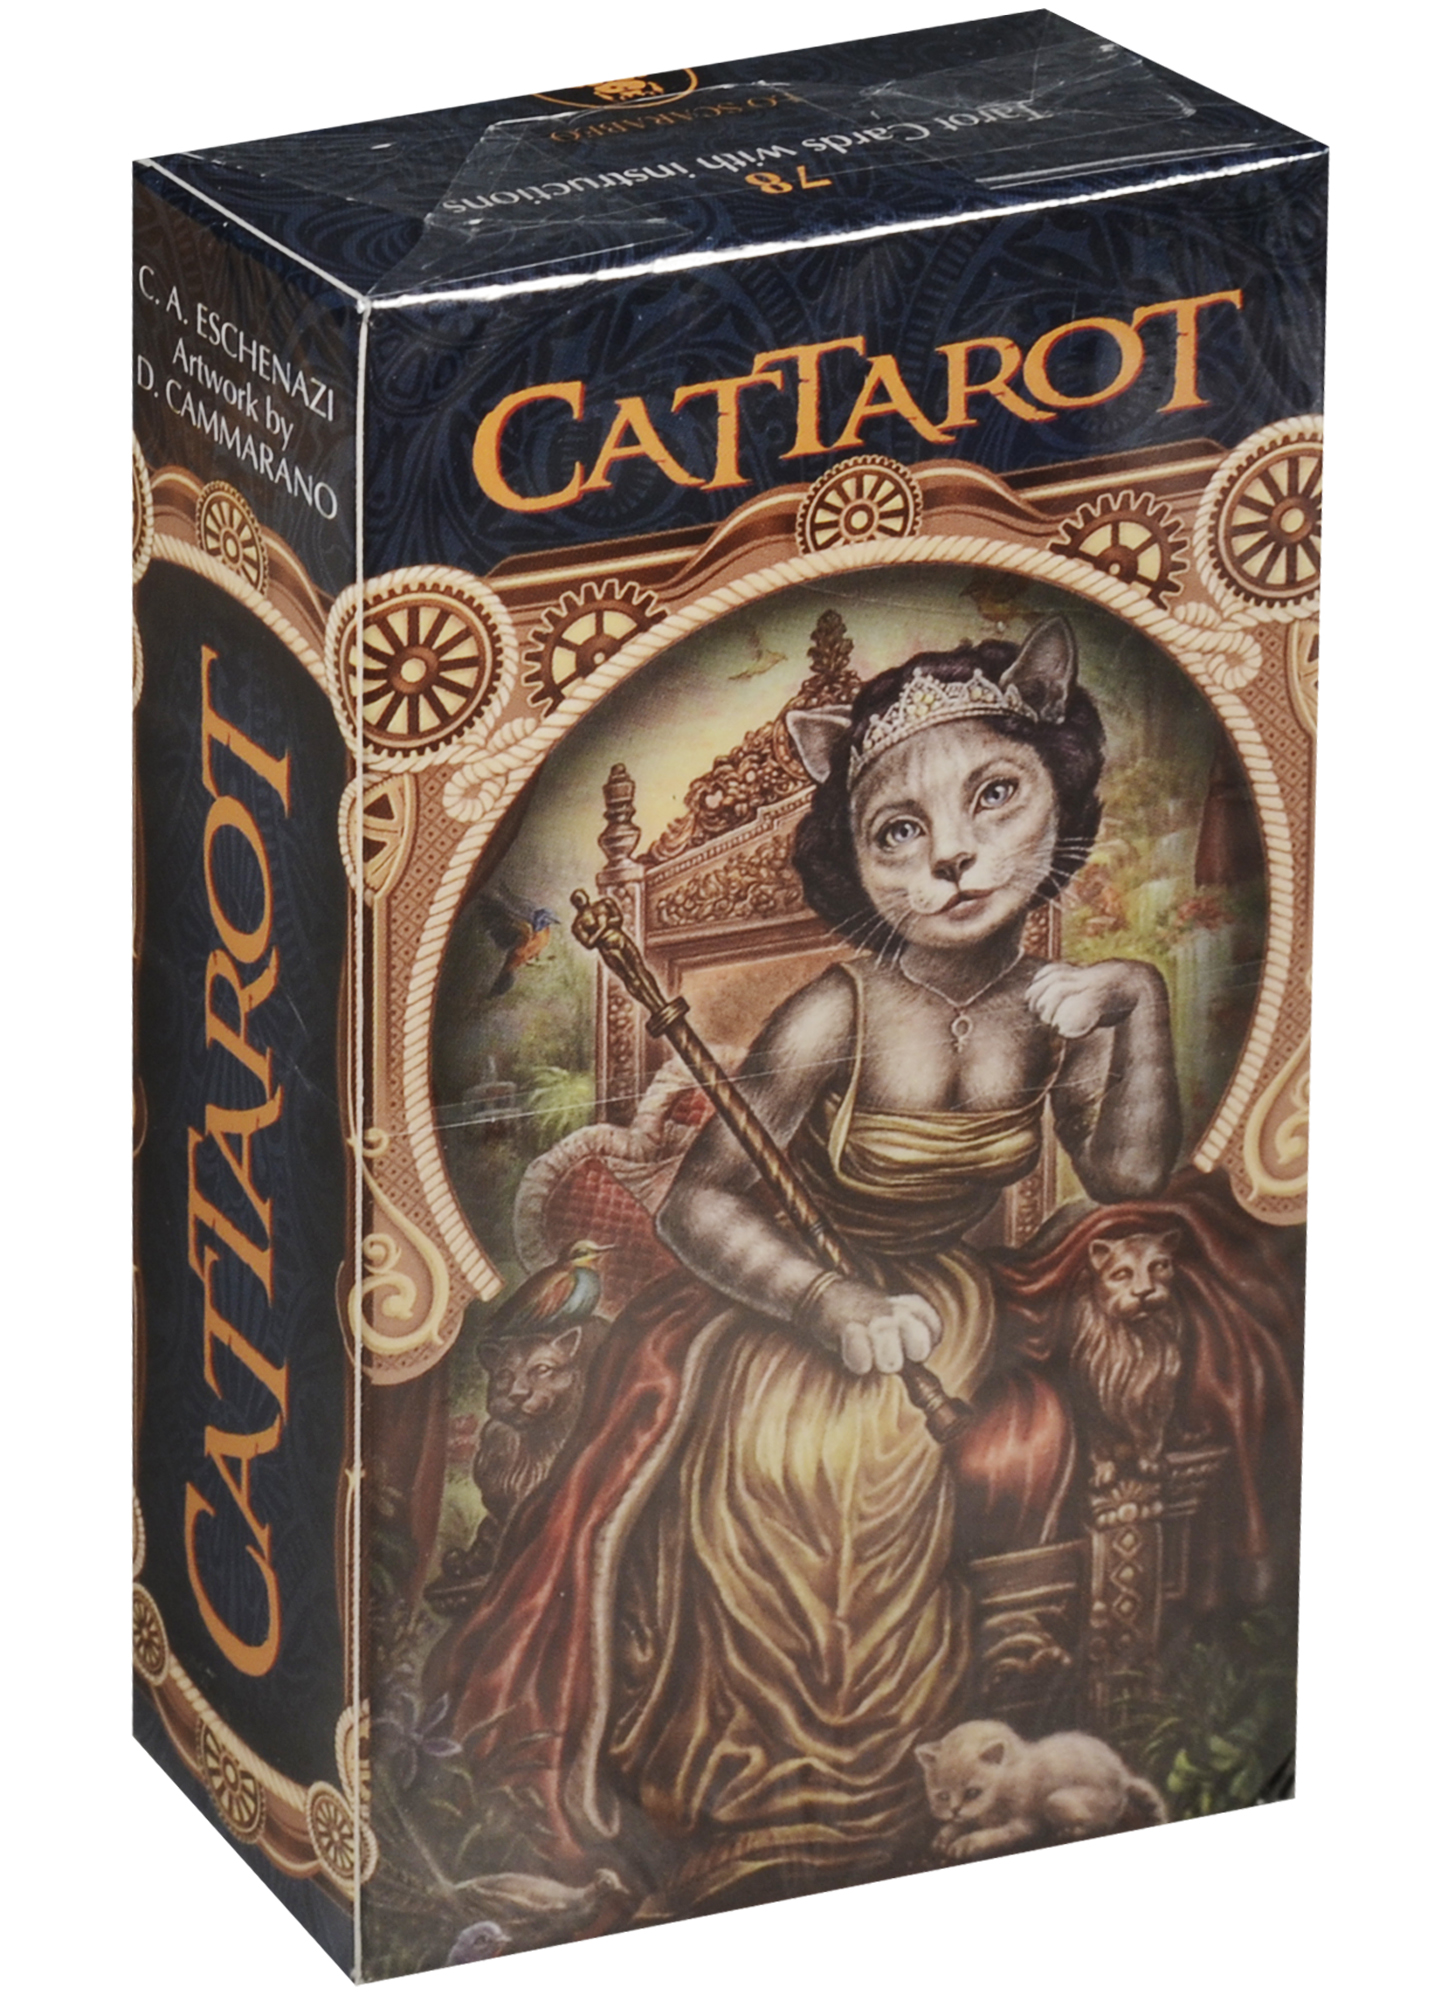 Cattarot Tarot Cards with instructions